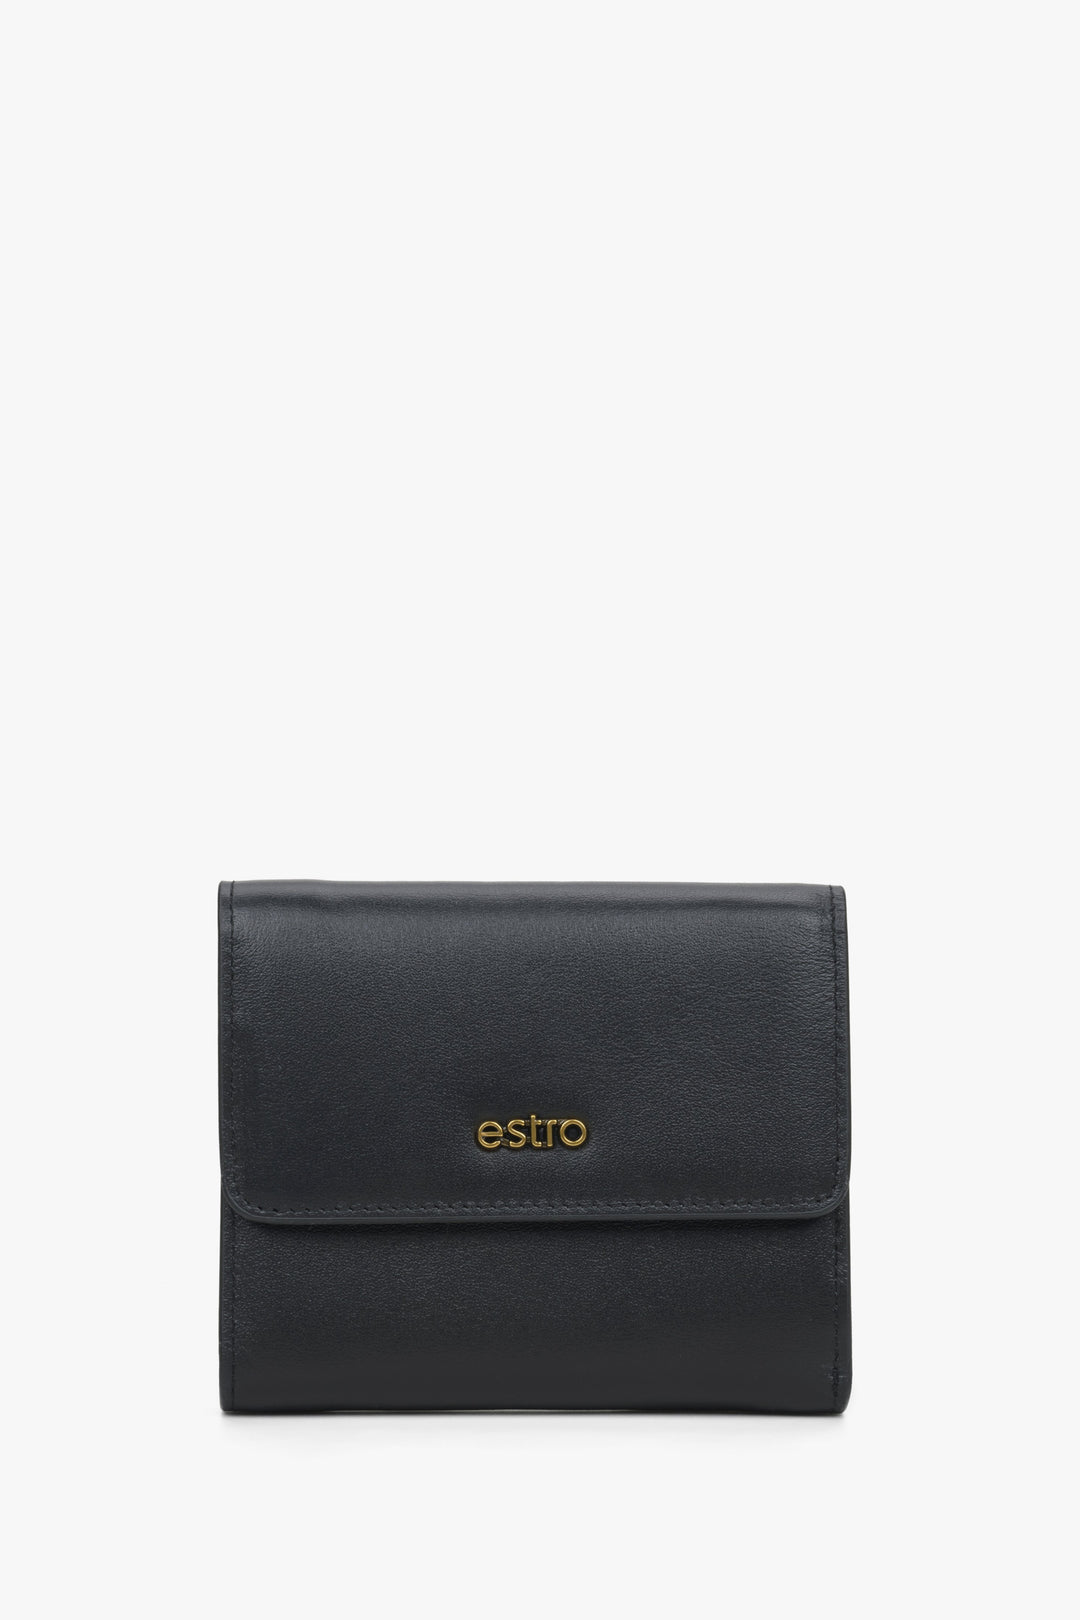 Women's Small Tri-Fold Black Wallet made of Genuine Leather Estro ER00114486.